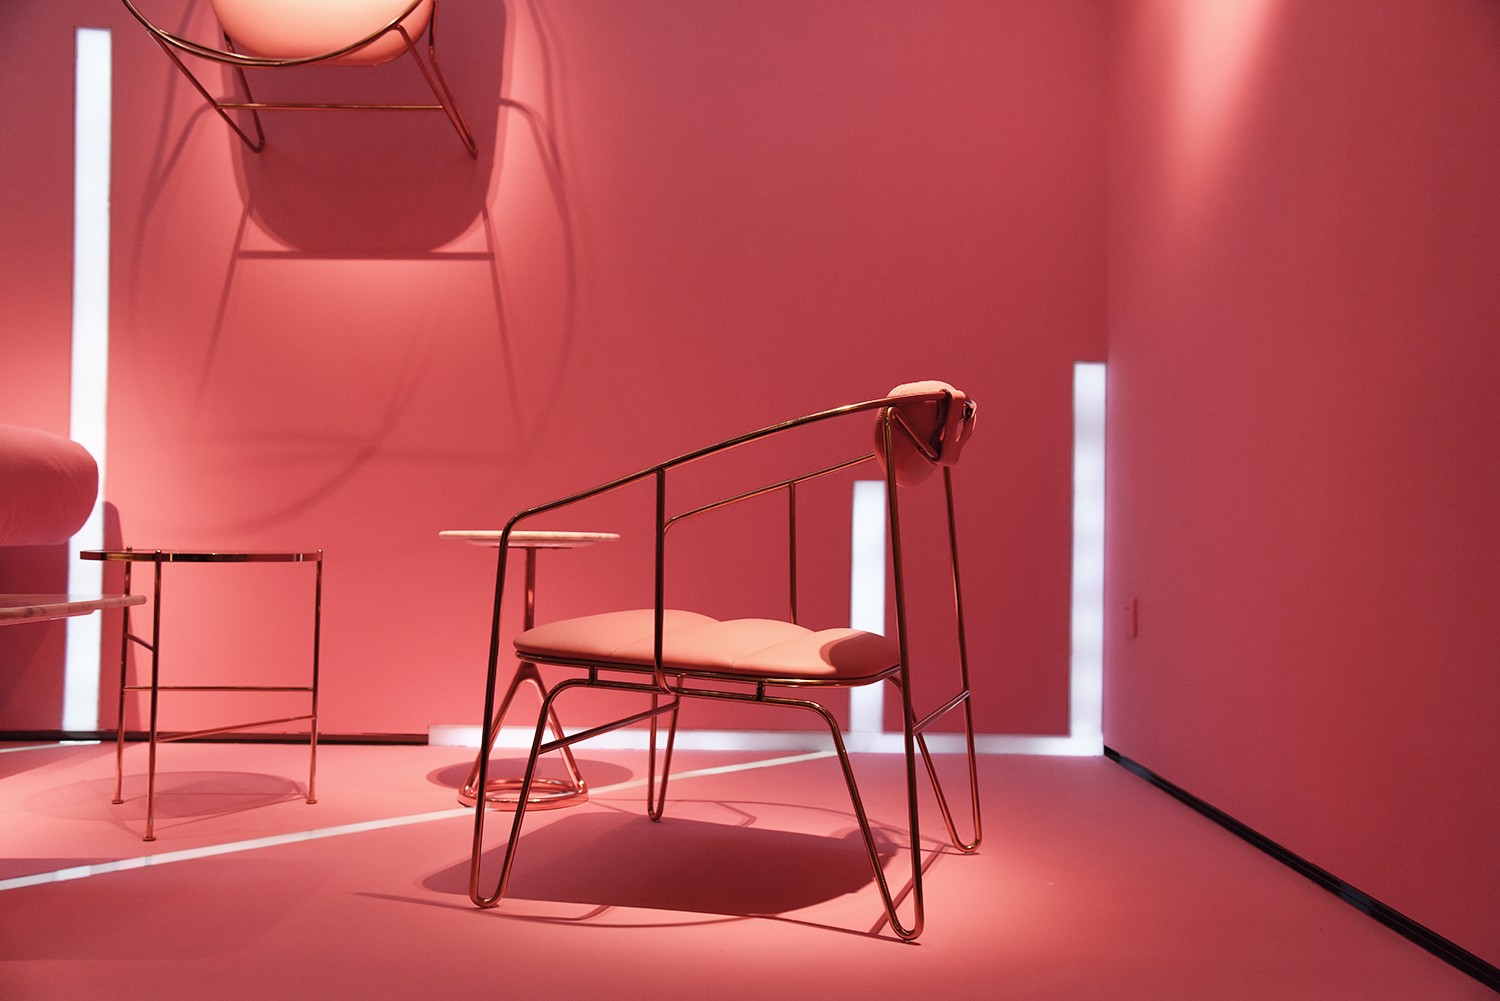 Beijing design studio Maxmarko showed Derek Chan’s bold new furniture collection, conceived in a sensuously pink palette, at Design Shanghai 2018.